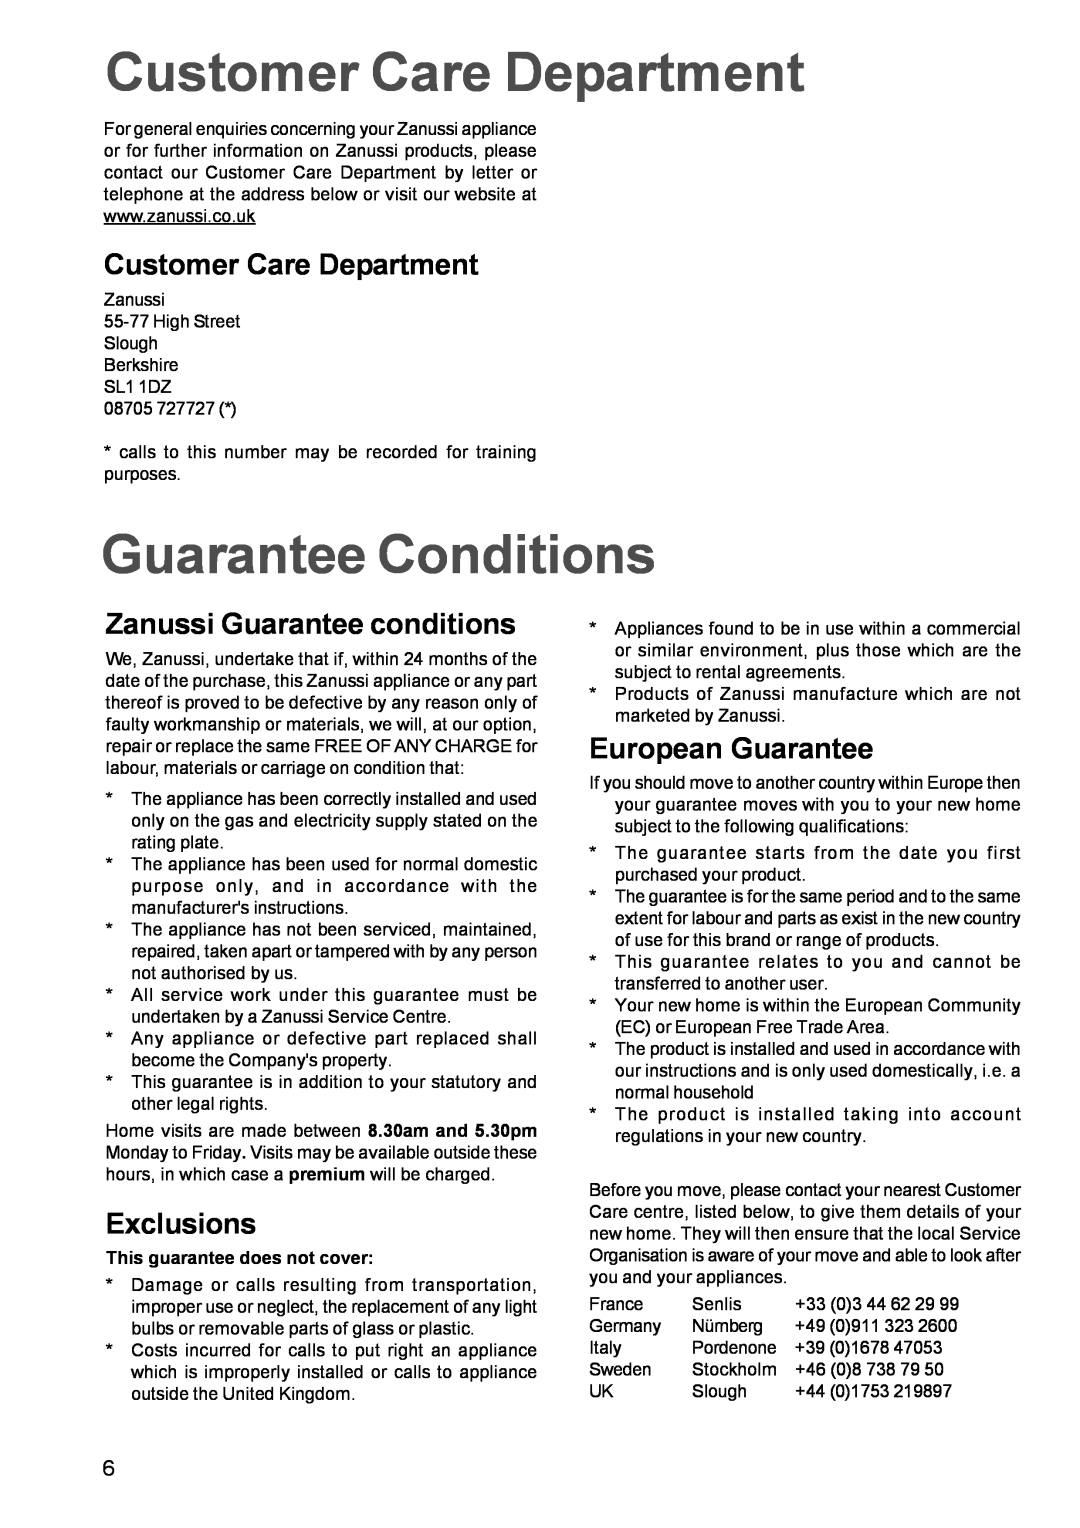 Zanussi GAS HOB manual Customer Care Department, Guarantee Conditions, Zanussi Guarantee conditions, Exclusions 